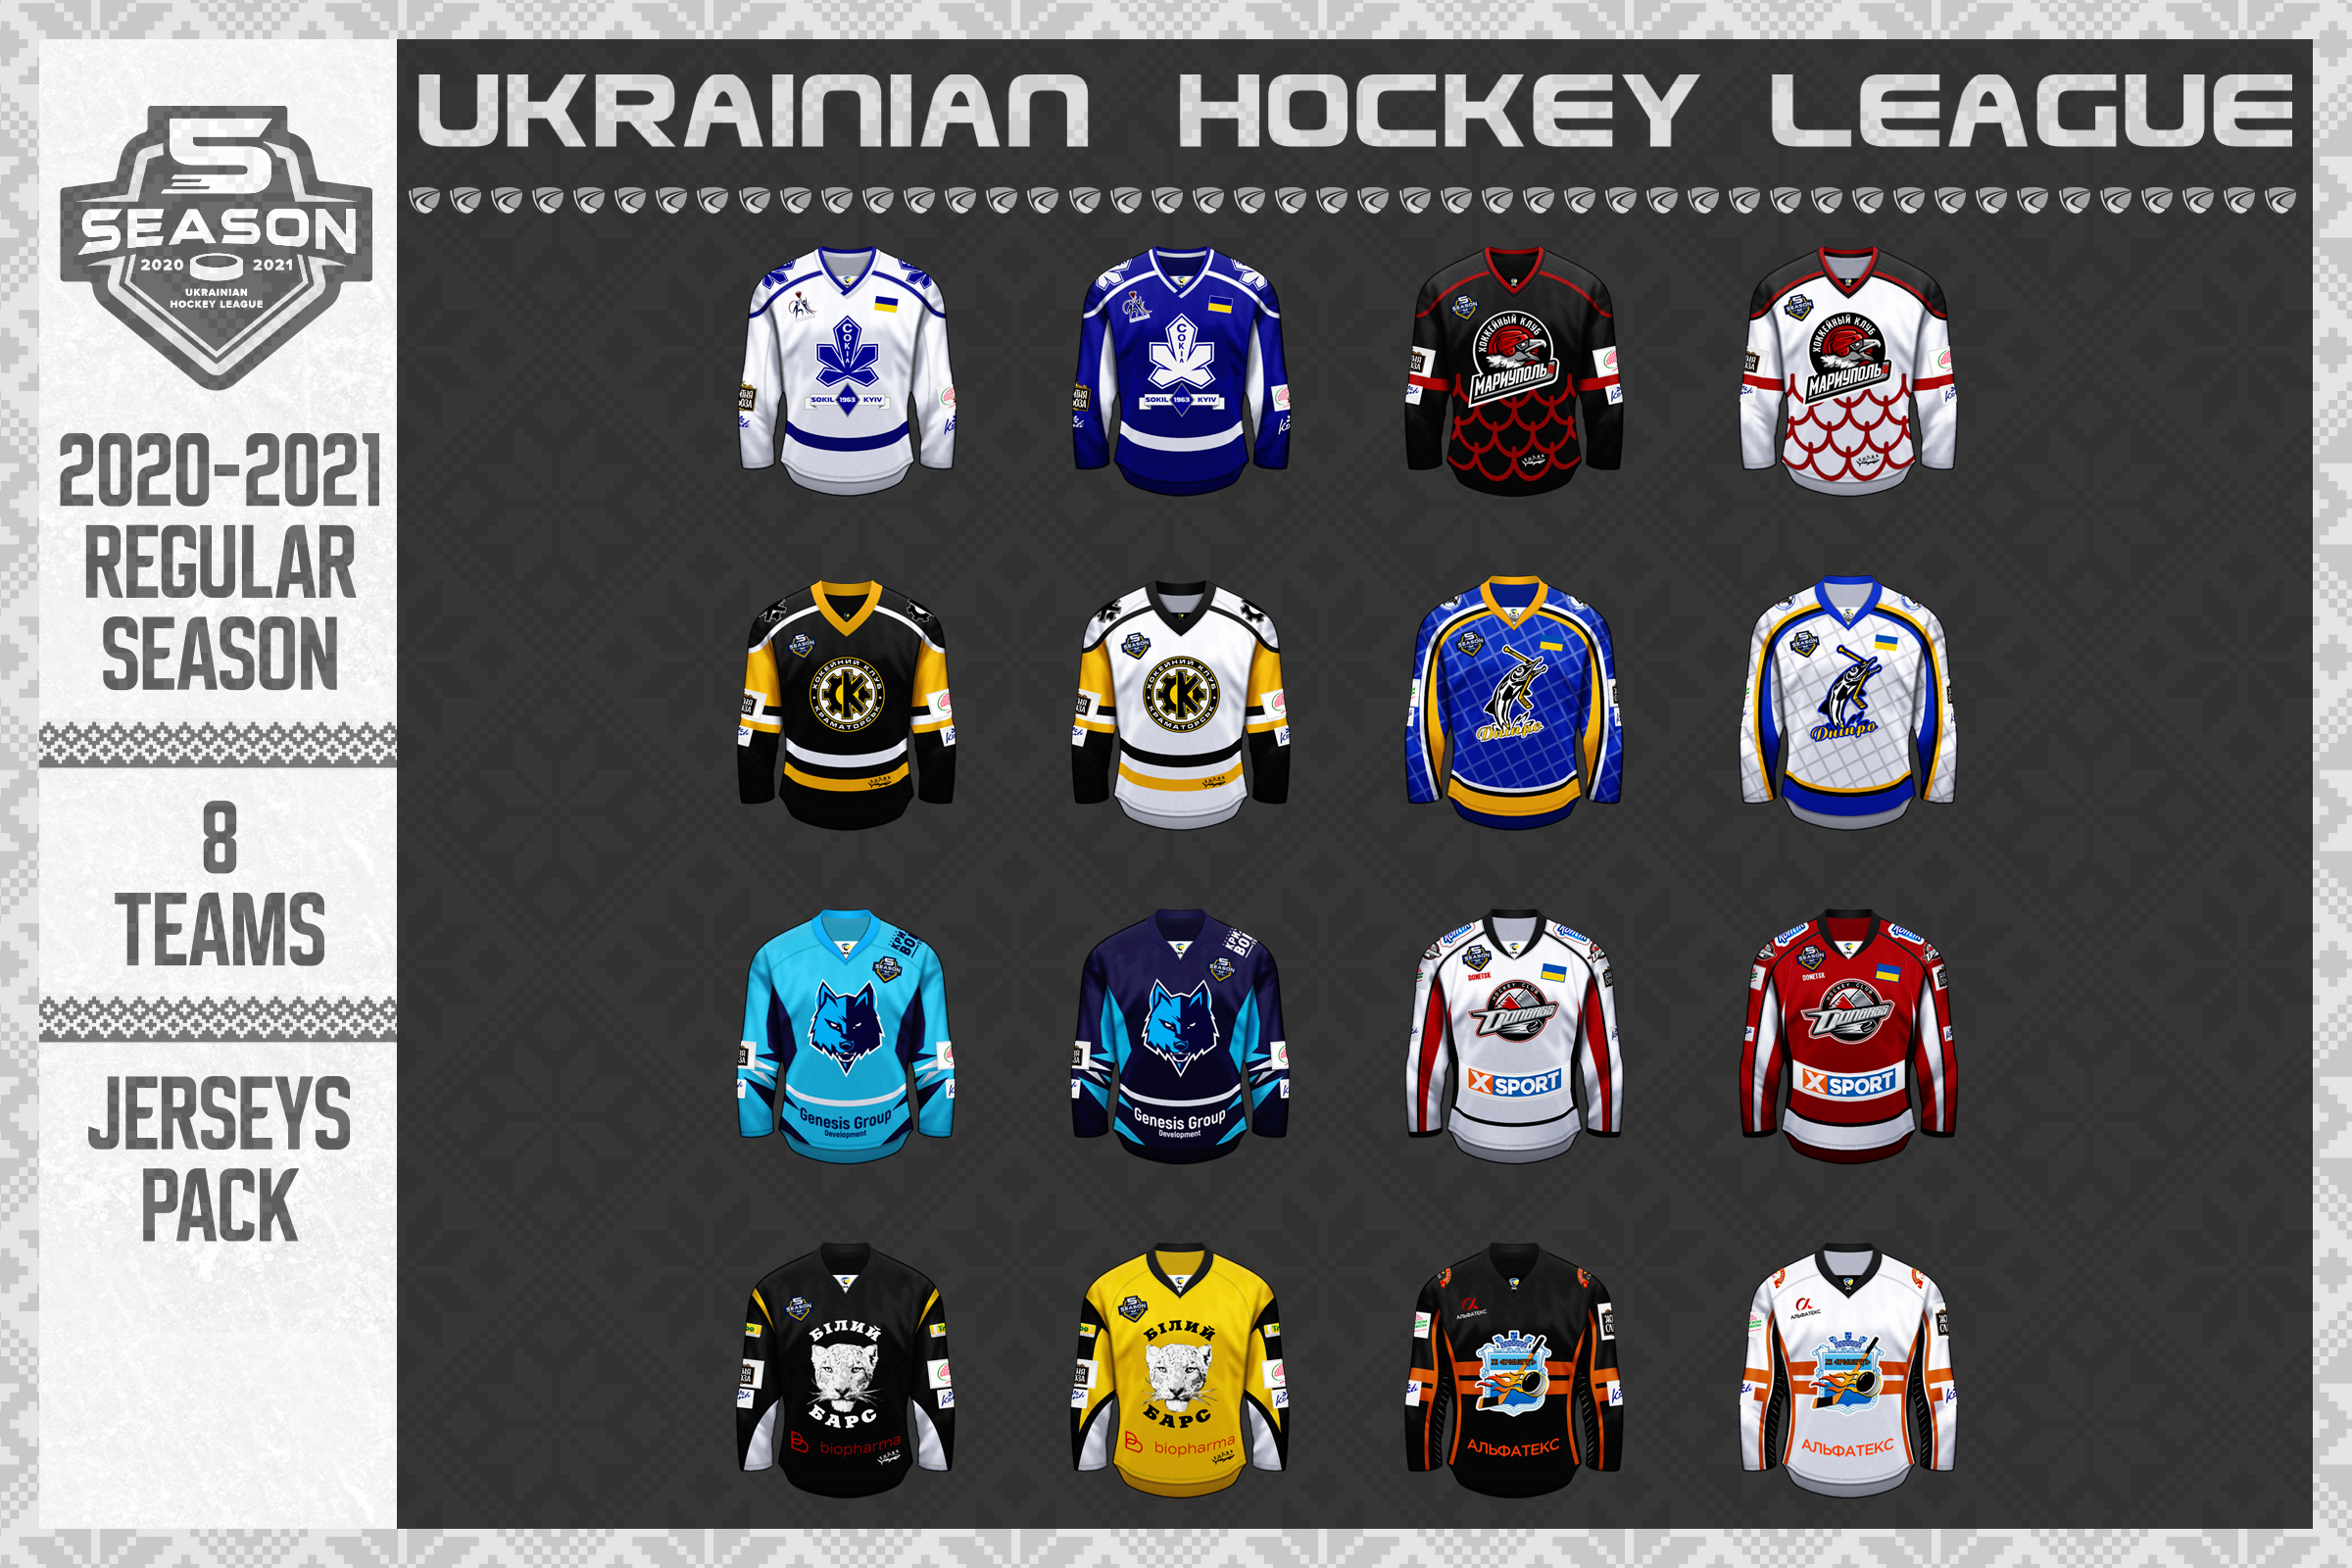 Jerseys Patch Ukrainian Hockey League season 20-21